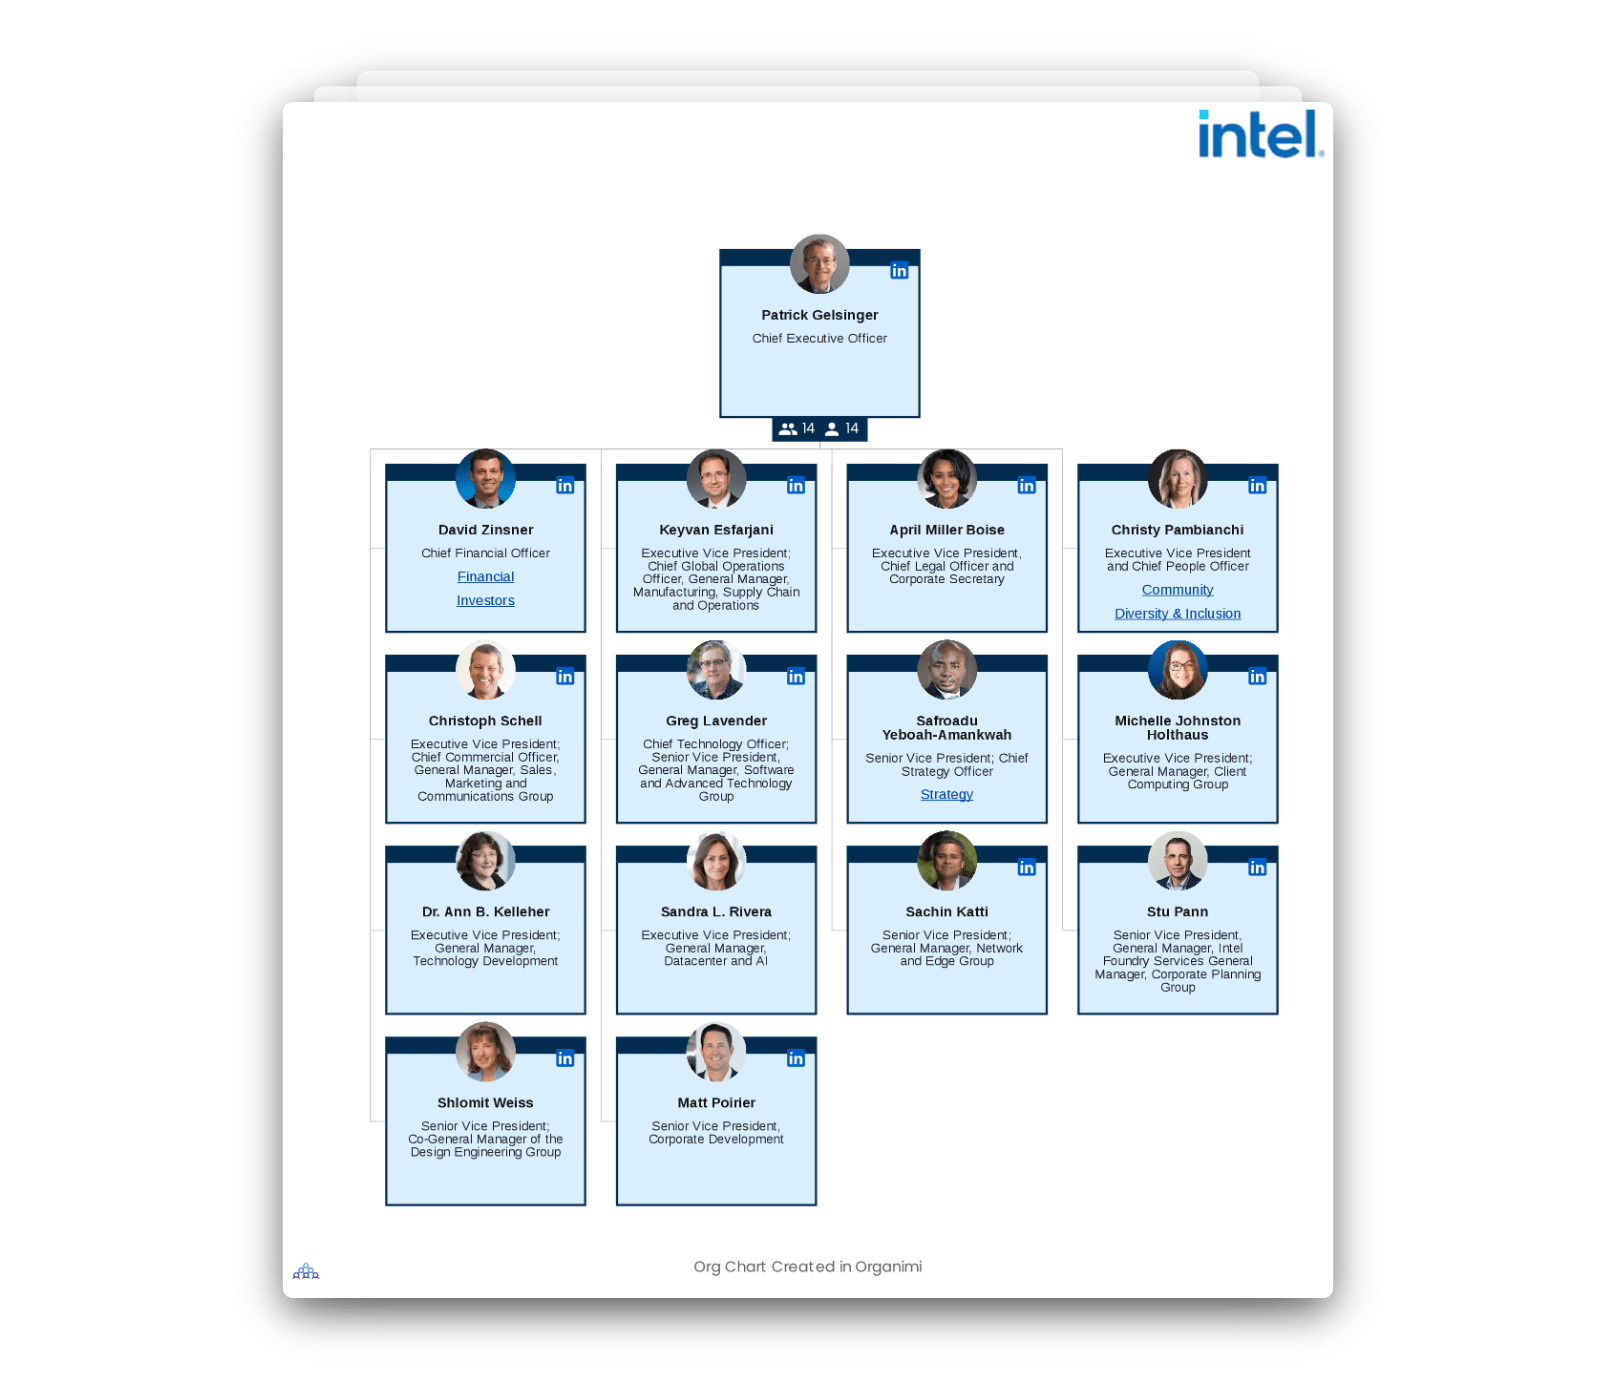 Intel's Organizational Structure Chart